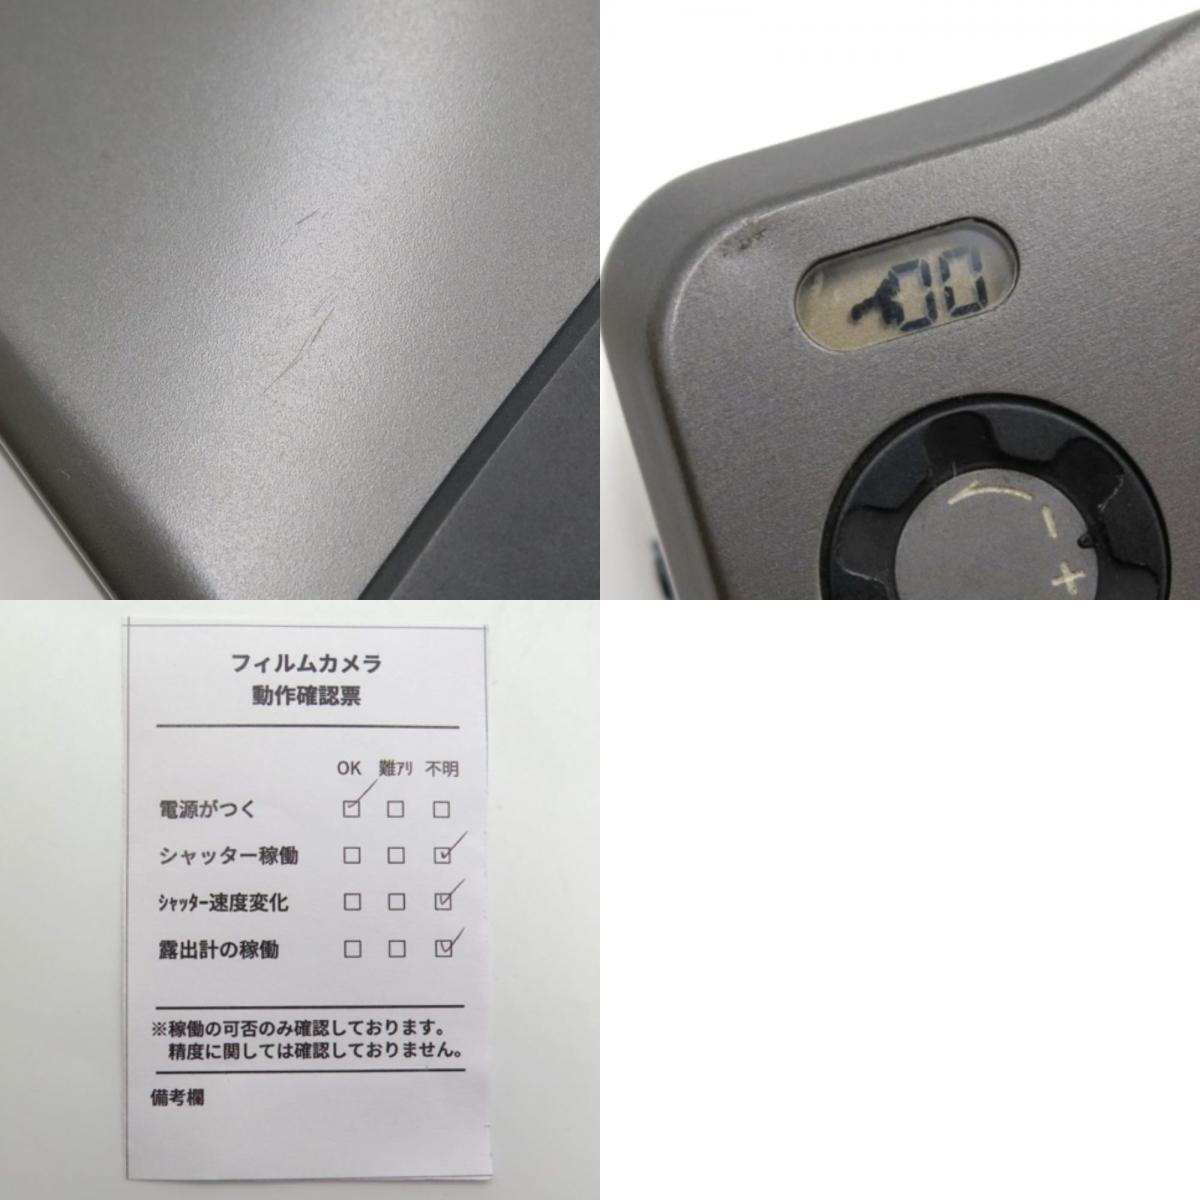 1 иен ~ Contax Contax T2 пленочный фотоаппарат Carl Zeiss Sonnar 2.8/38 T* электризация только проверка settled y233-2646556[Y товар ]